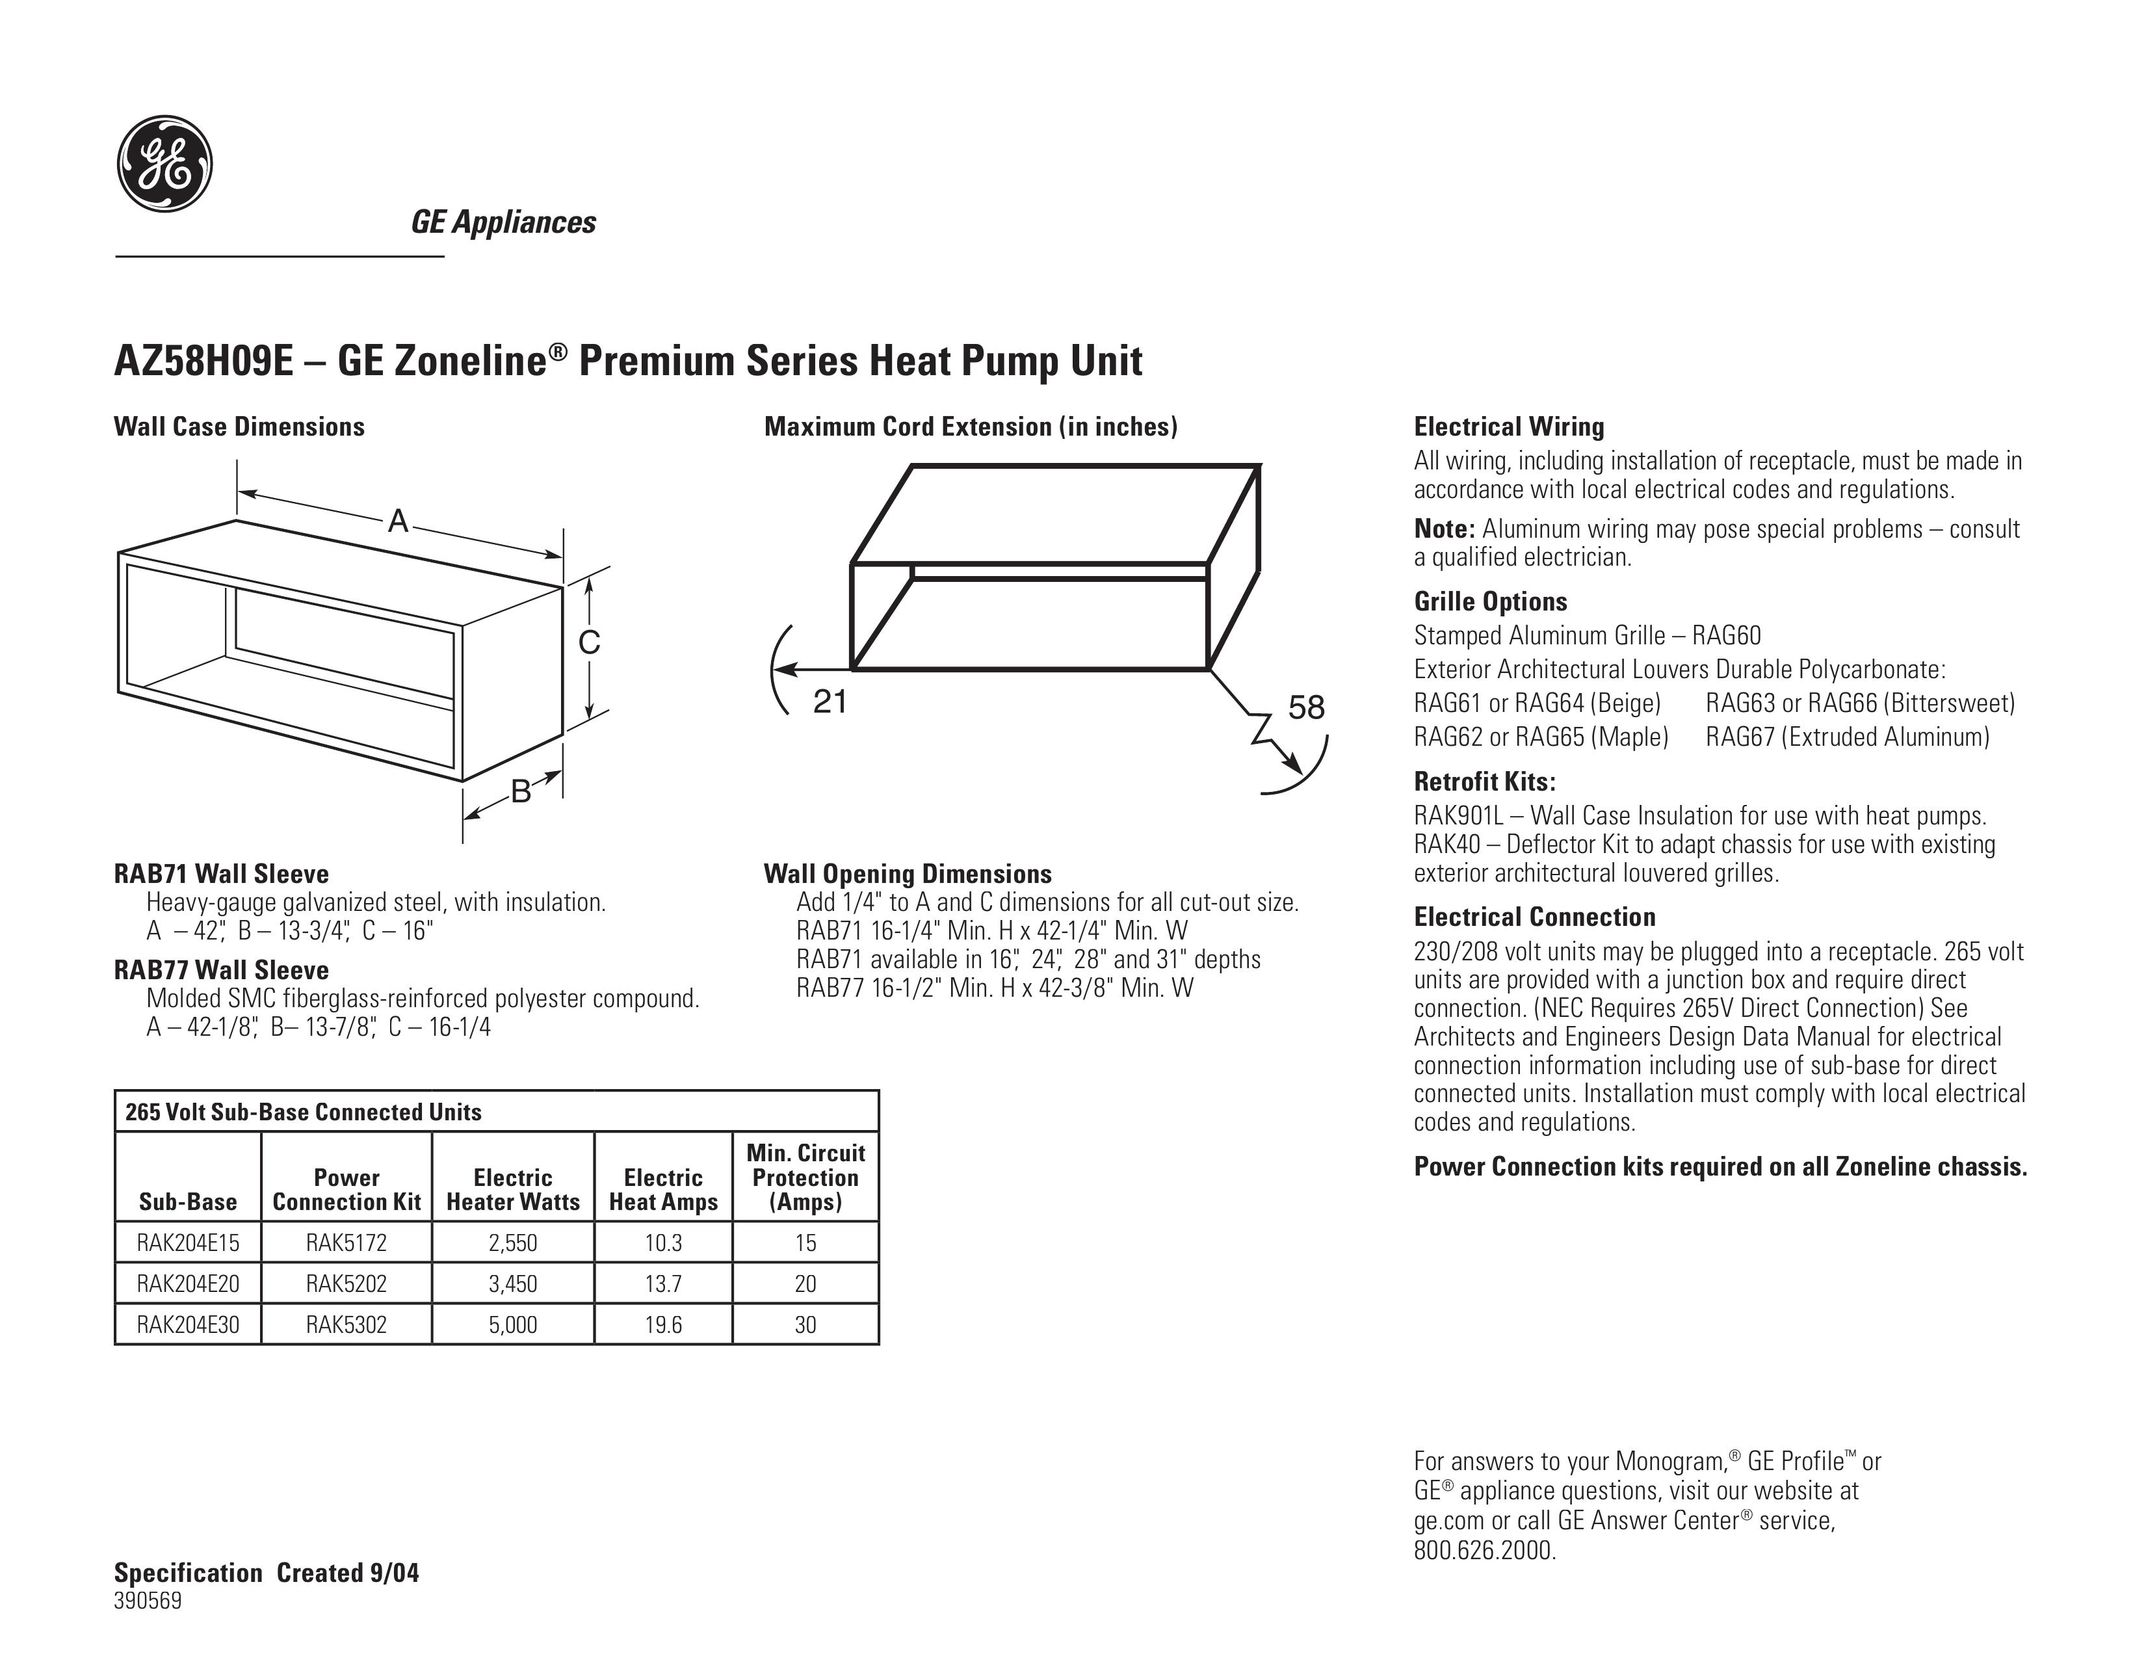 GE AZ58H09EAC Heat Pump User Manual